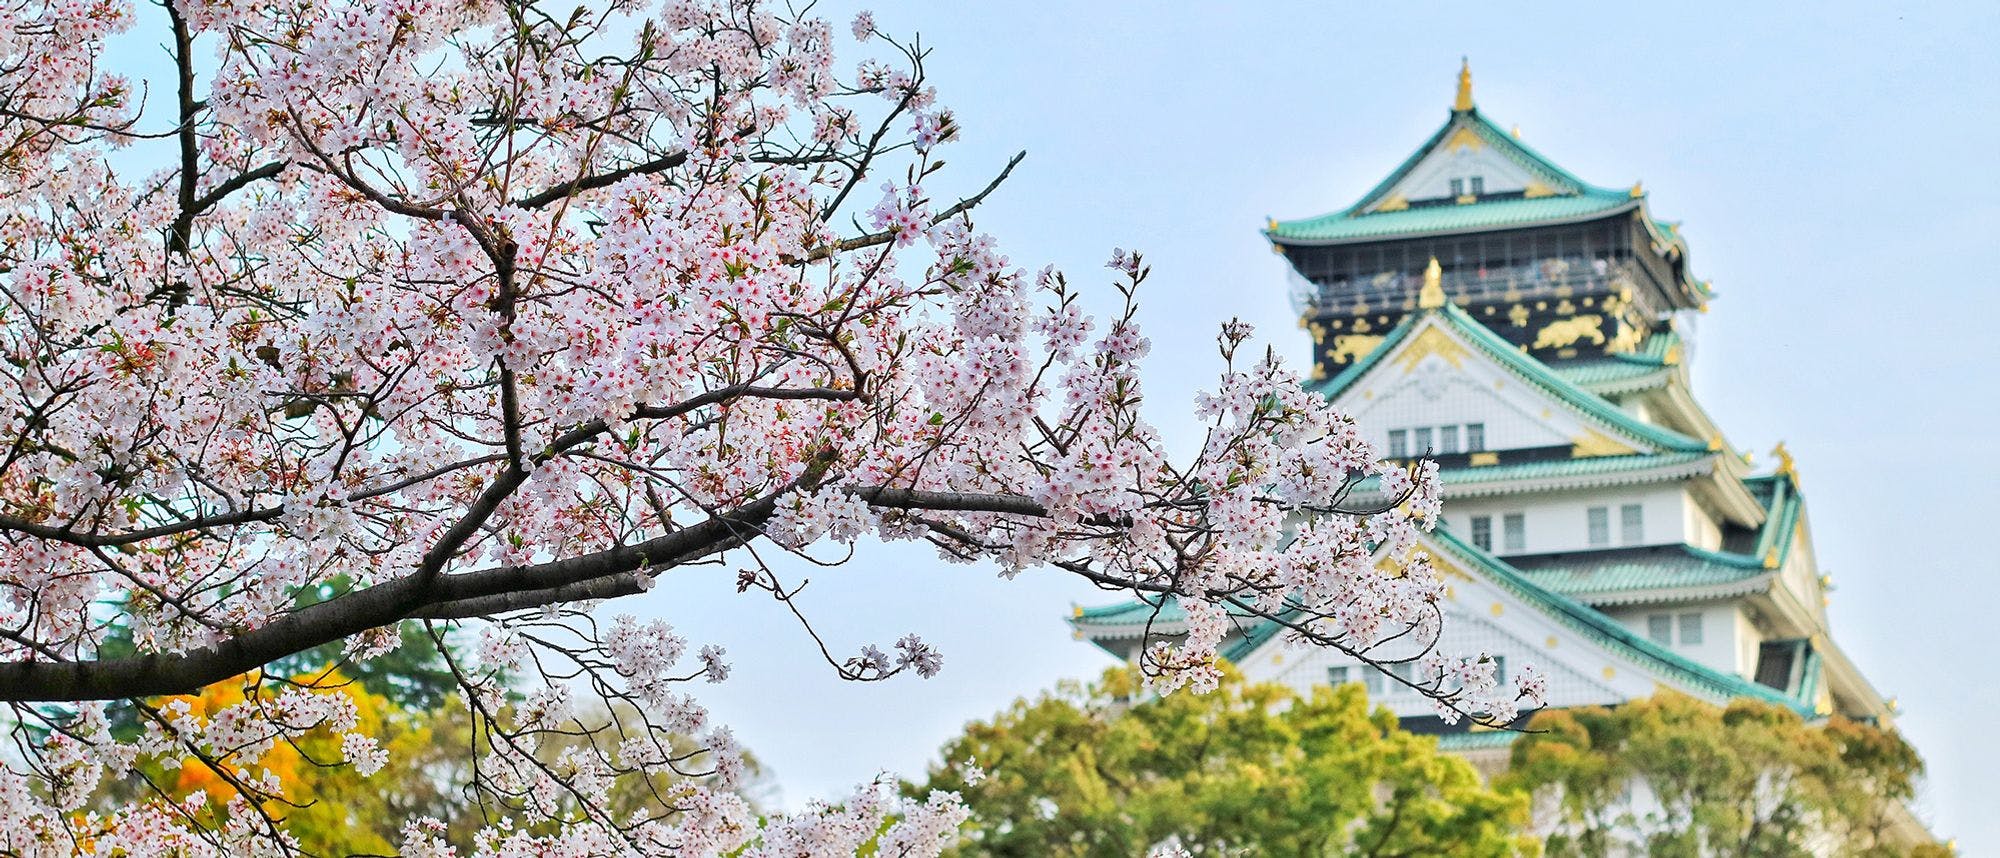 Osaka Castle during cherry blossom season